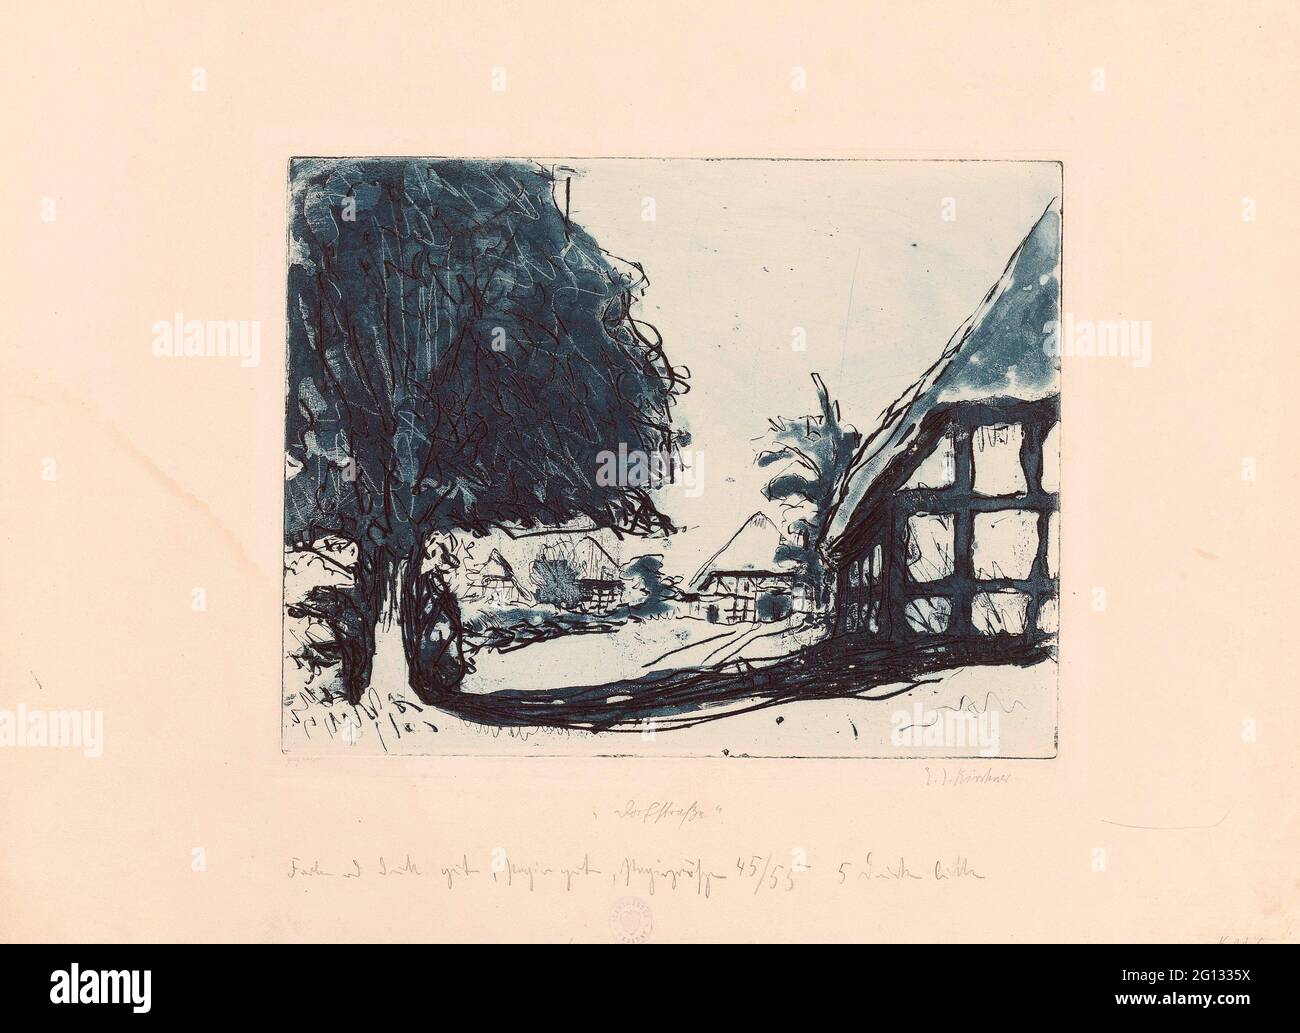 Ernst Ludwig Kirchner. Village Street - 1906 - 09 - Ernst Ludwig Kirchner German, 1880-1938. Incisione, da una piastra di ottone, in grigio-blu su wove bianco Foto Stock